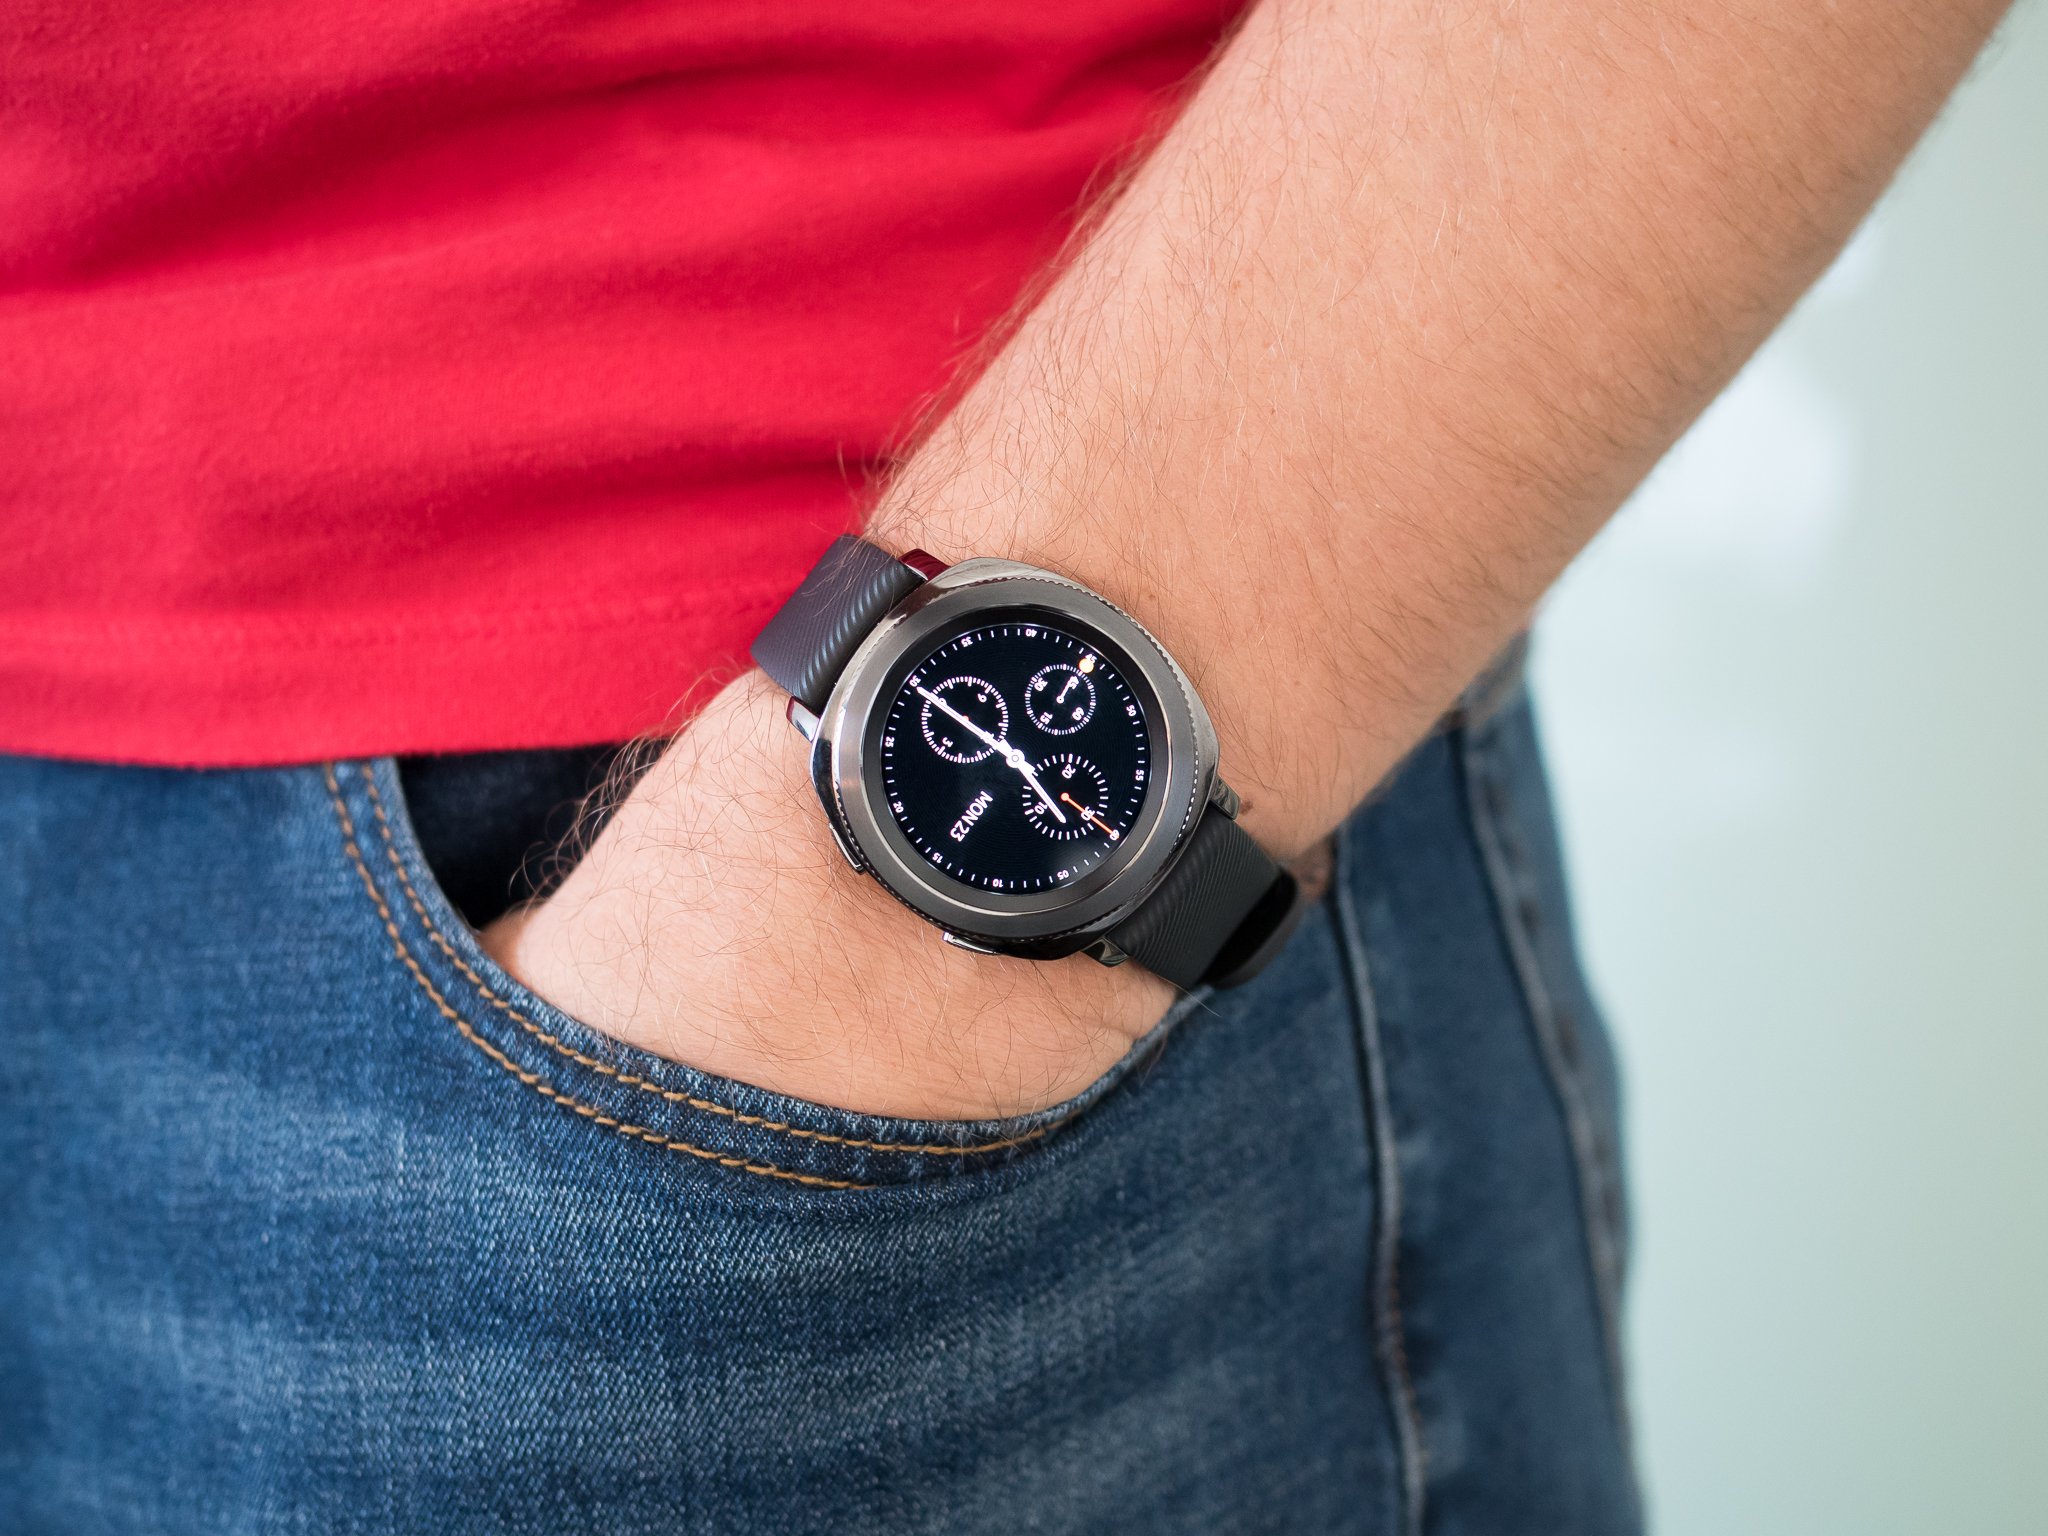 samsung gear sport smart watch with rubber strap 42.9 mm